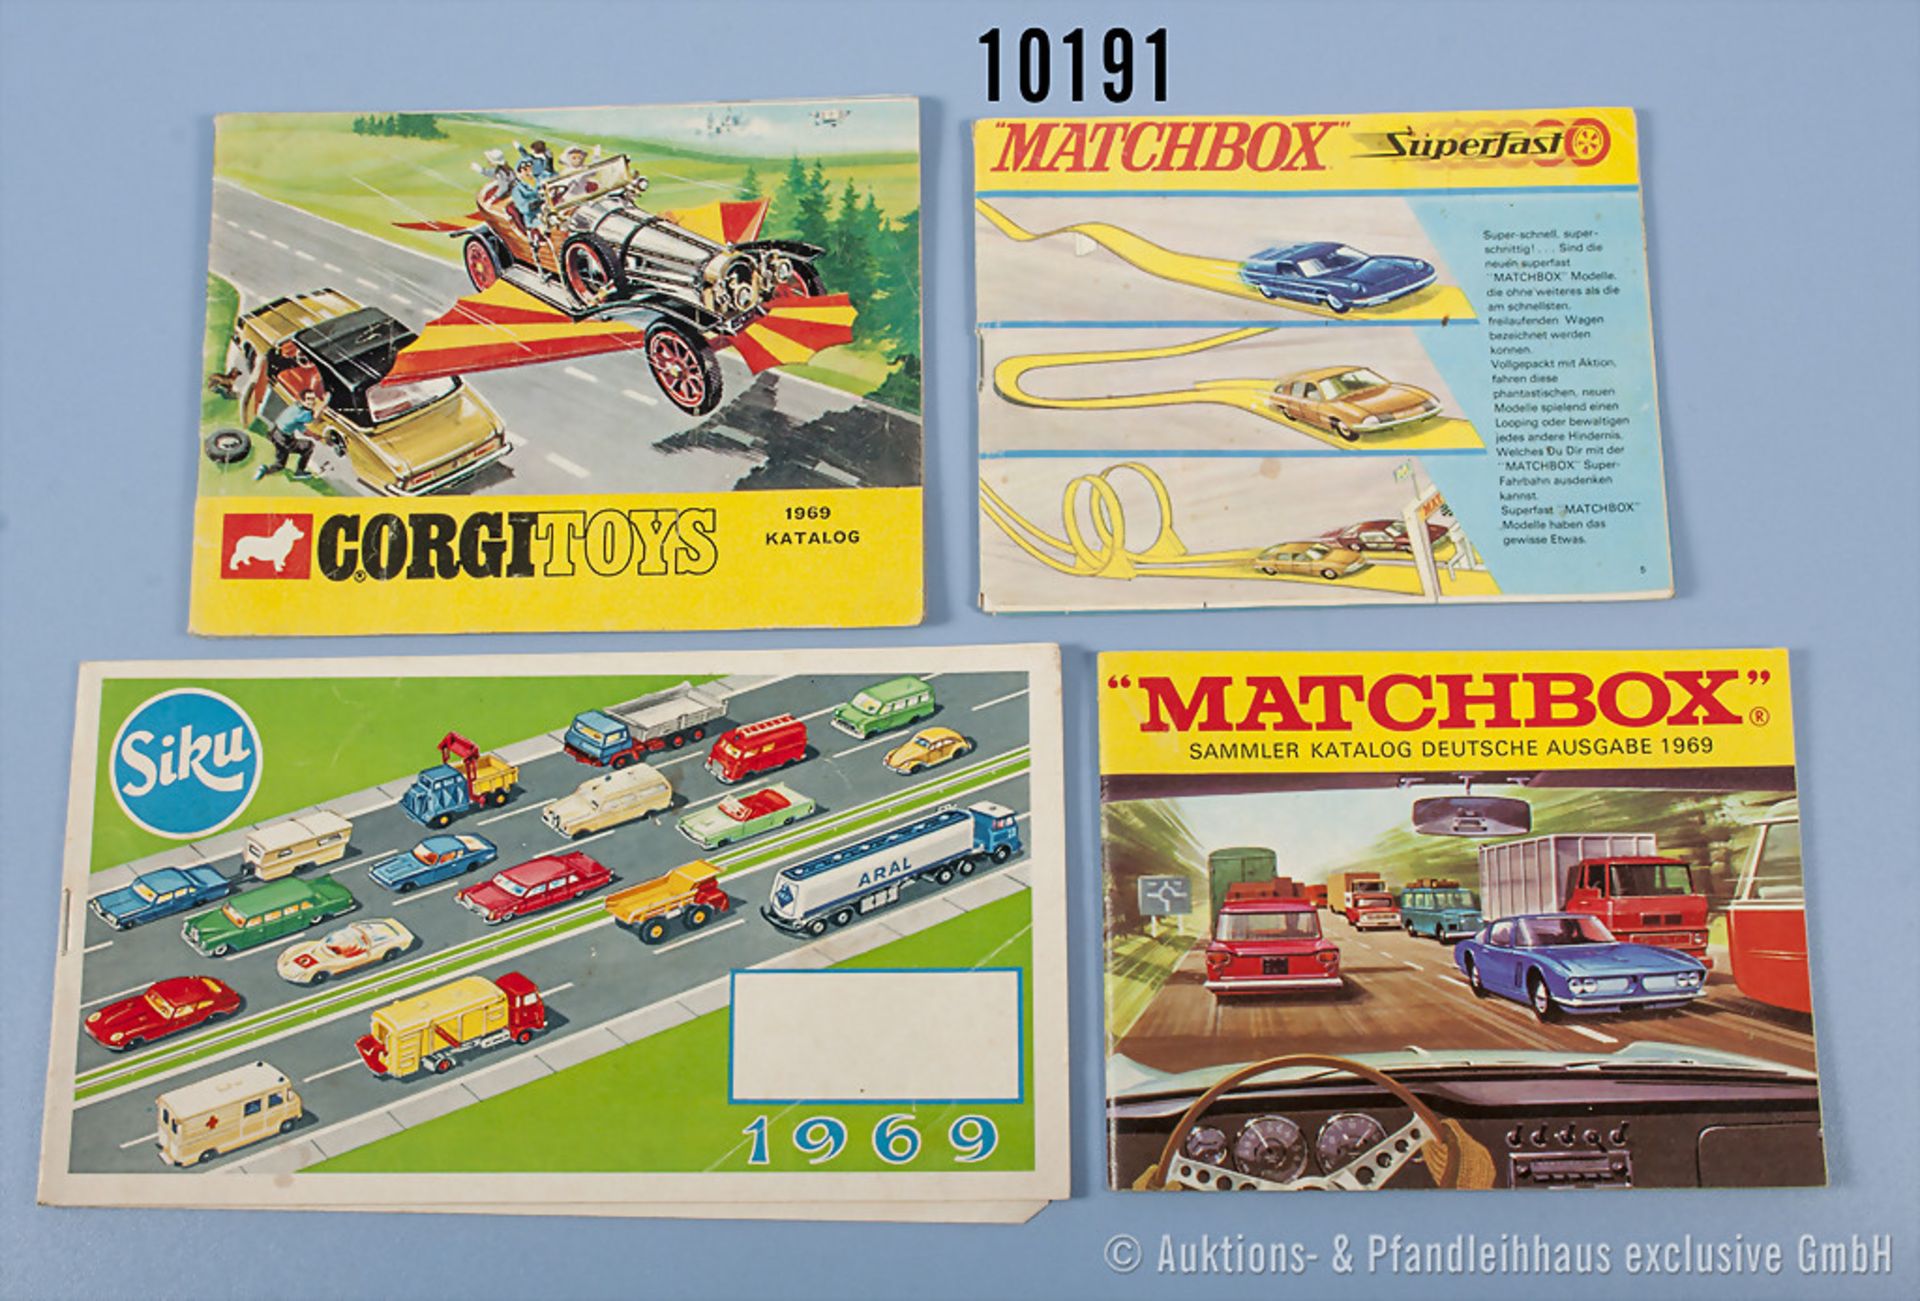 Konv. 3 Modellauto-Kataloge, Corgi Toys 1969 mit Kontrolliste für den Sammler, Siku 1969 und